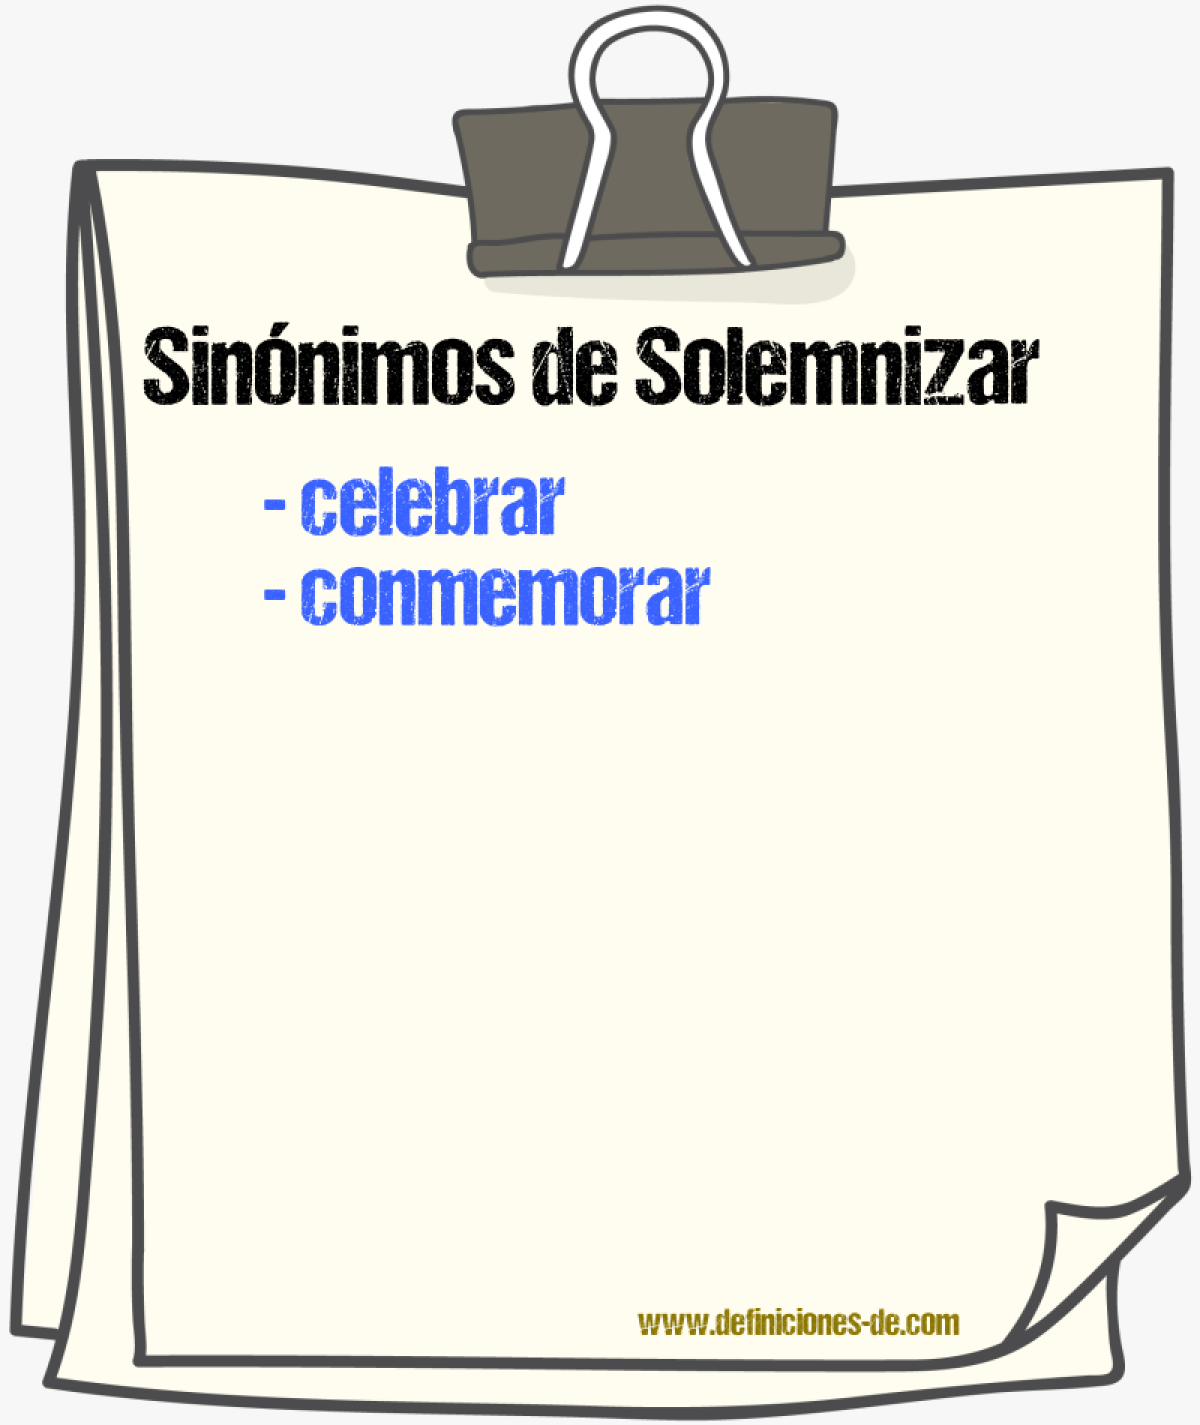 Sinónimos de solemnizar